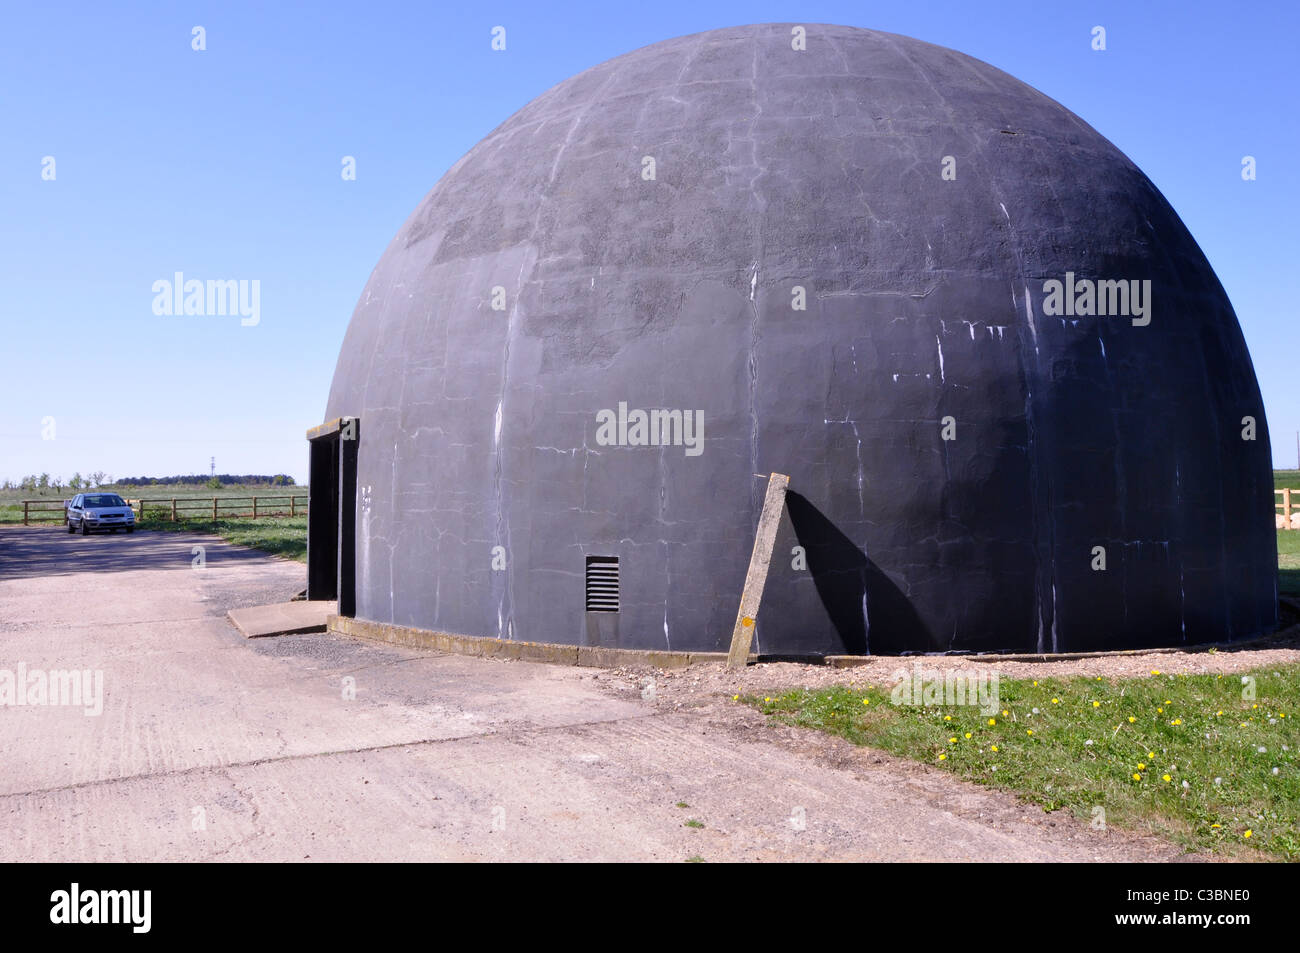 Landham airfield trainer dome Stock Photo